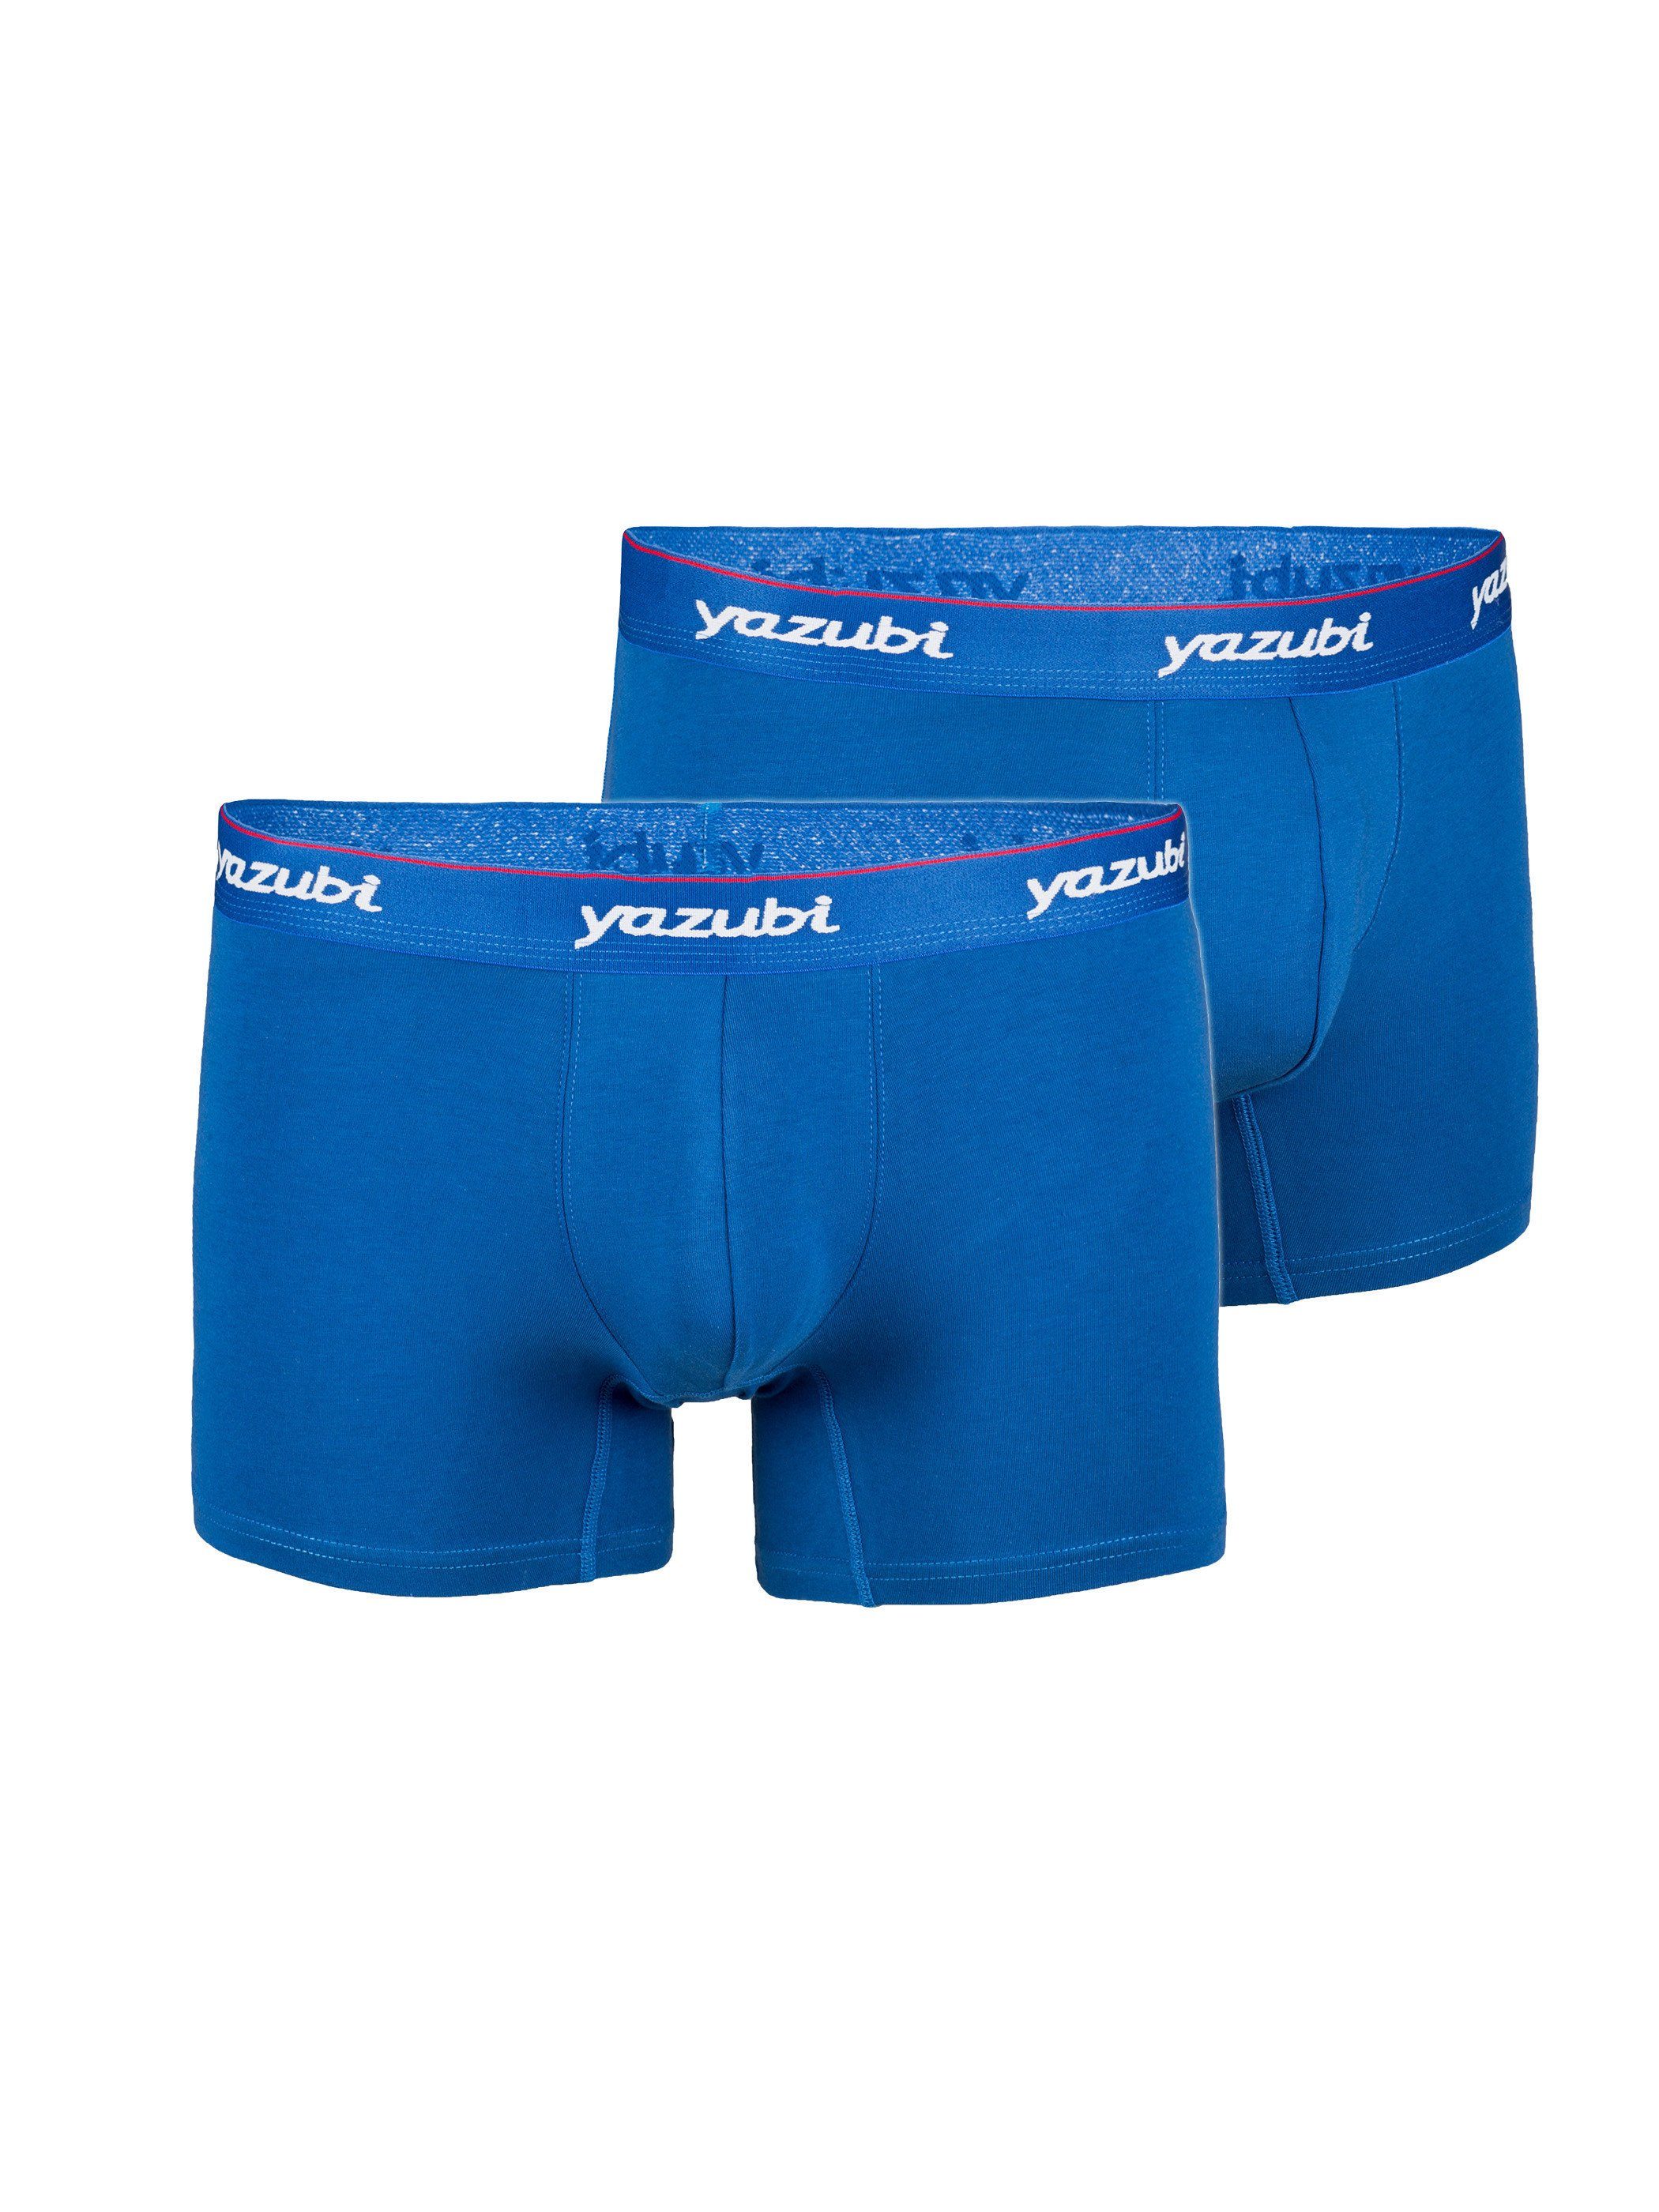 Yazubi Boxershorts Yazubi - Basic Trunks long (Spar-Packung, 2-St., 2er-Pack) bequeme Baumwoll Unterhosen im 2-Pack Blau (true blue 194057)